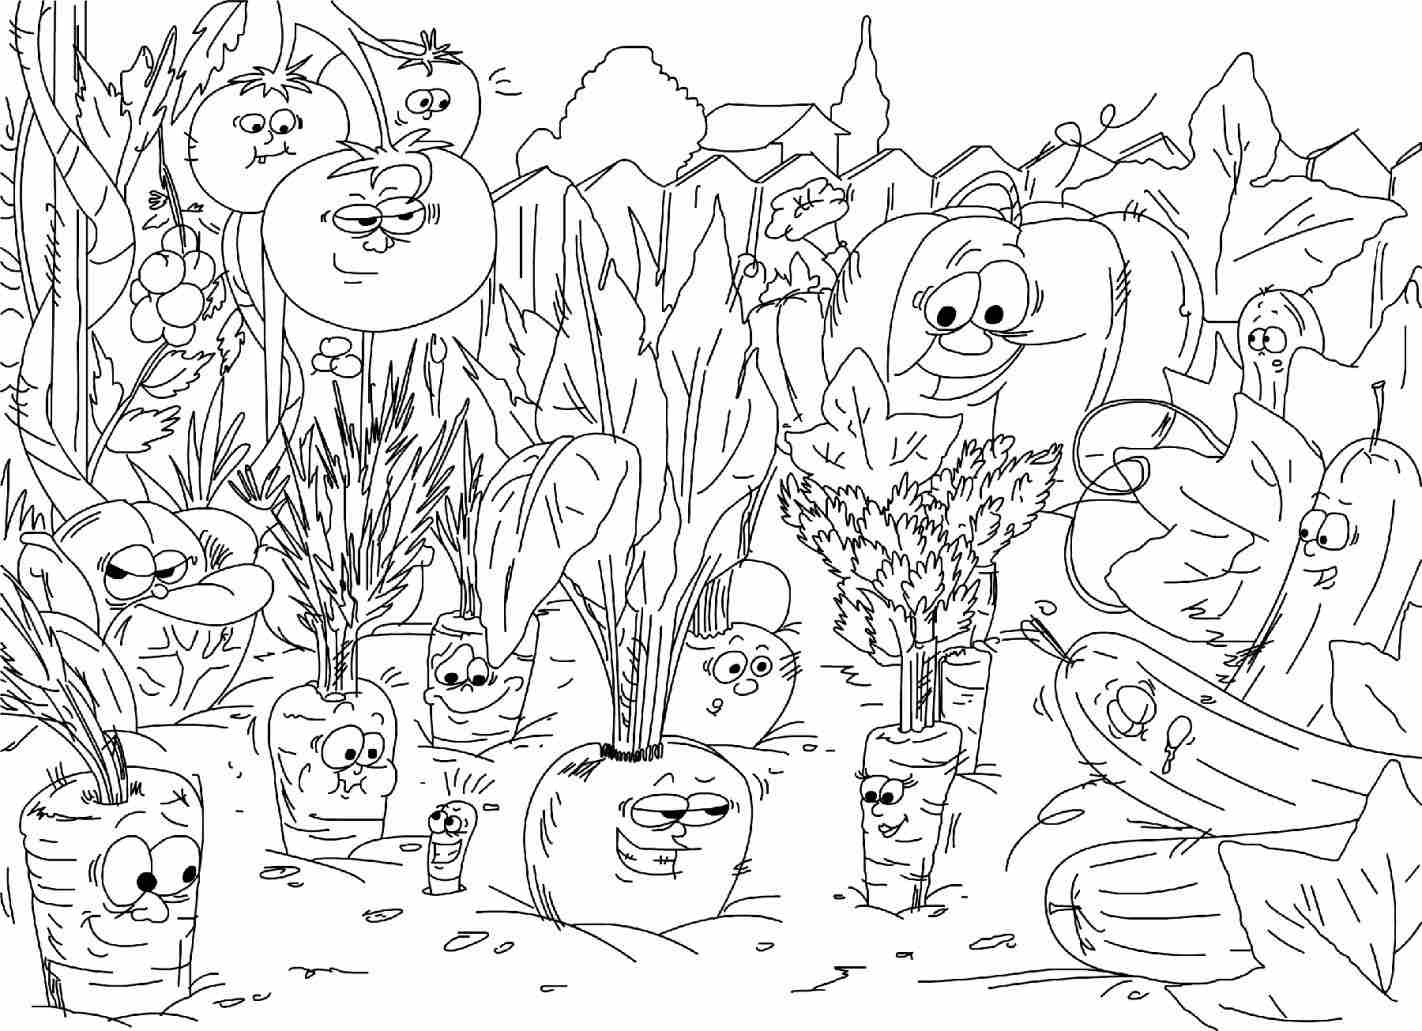 Vegetable Garden Sketch at Explore collection of